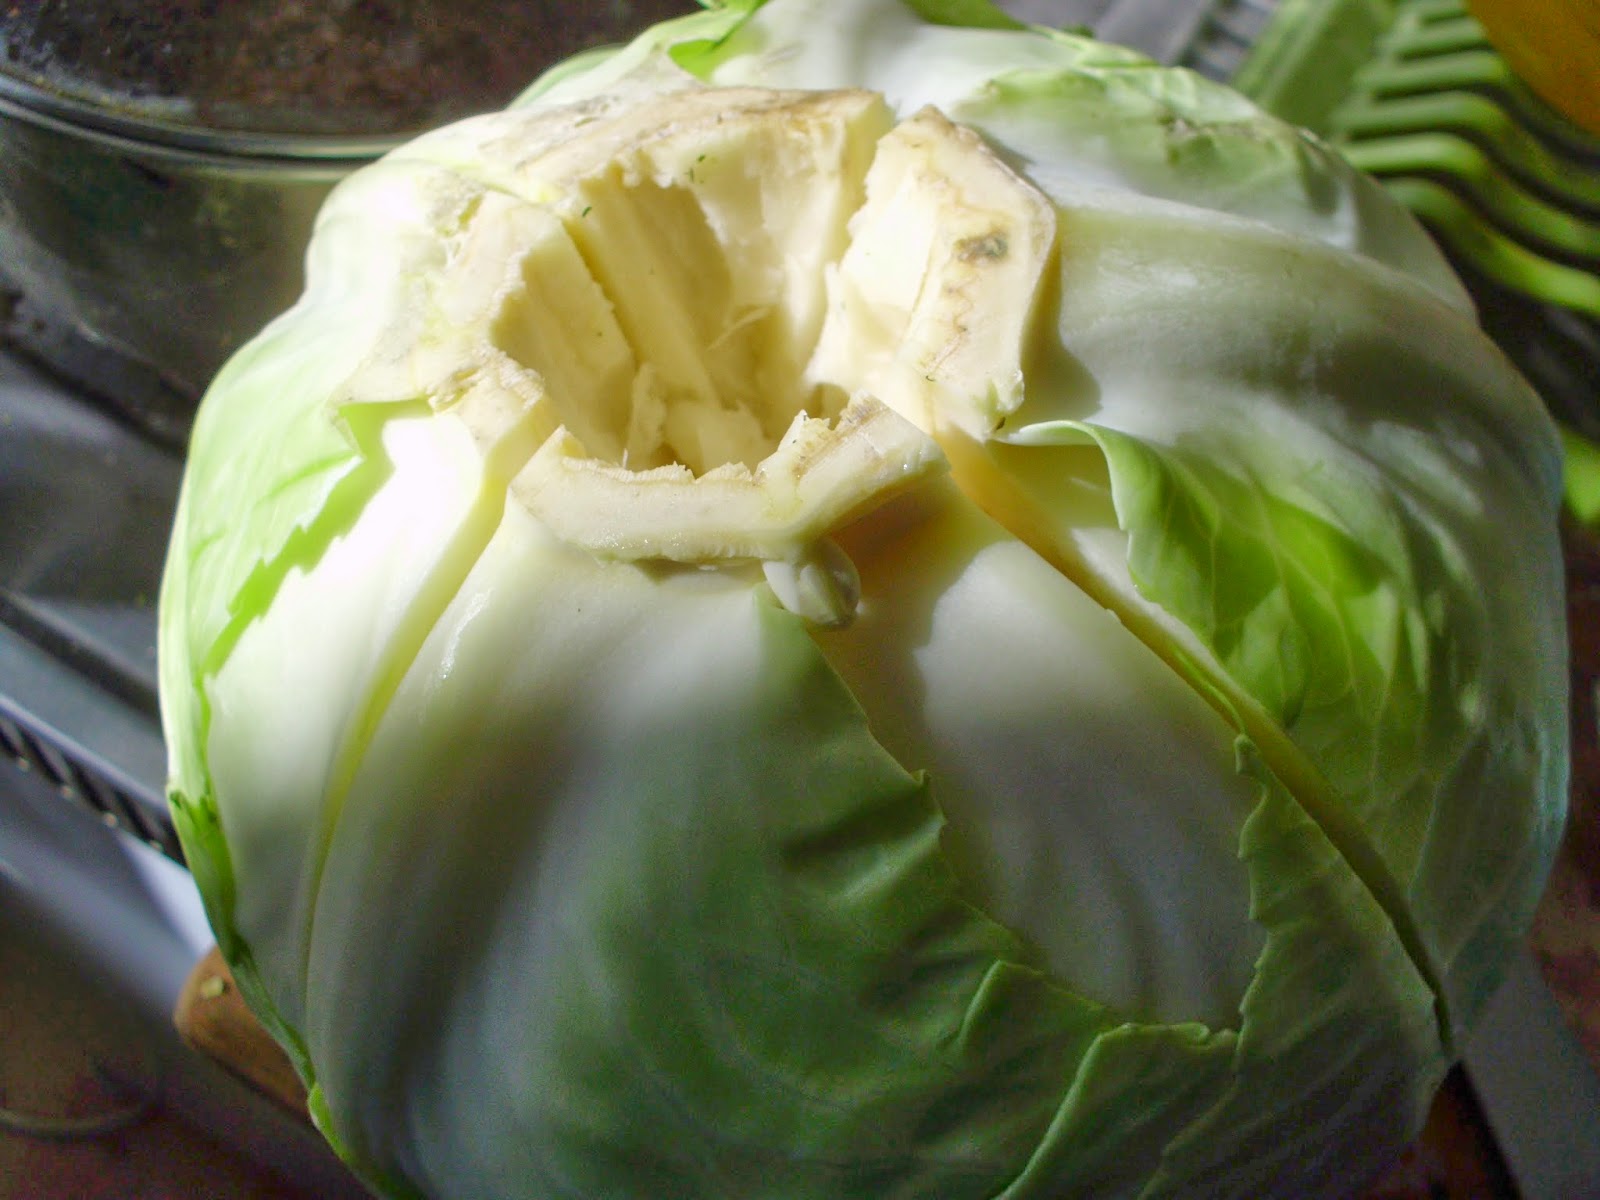 Balkan Veggie: Liberty cabbage